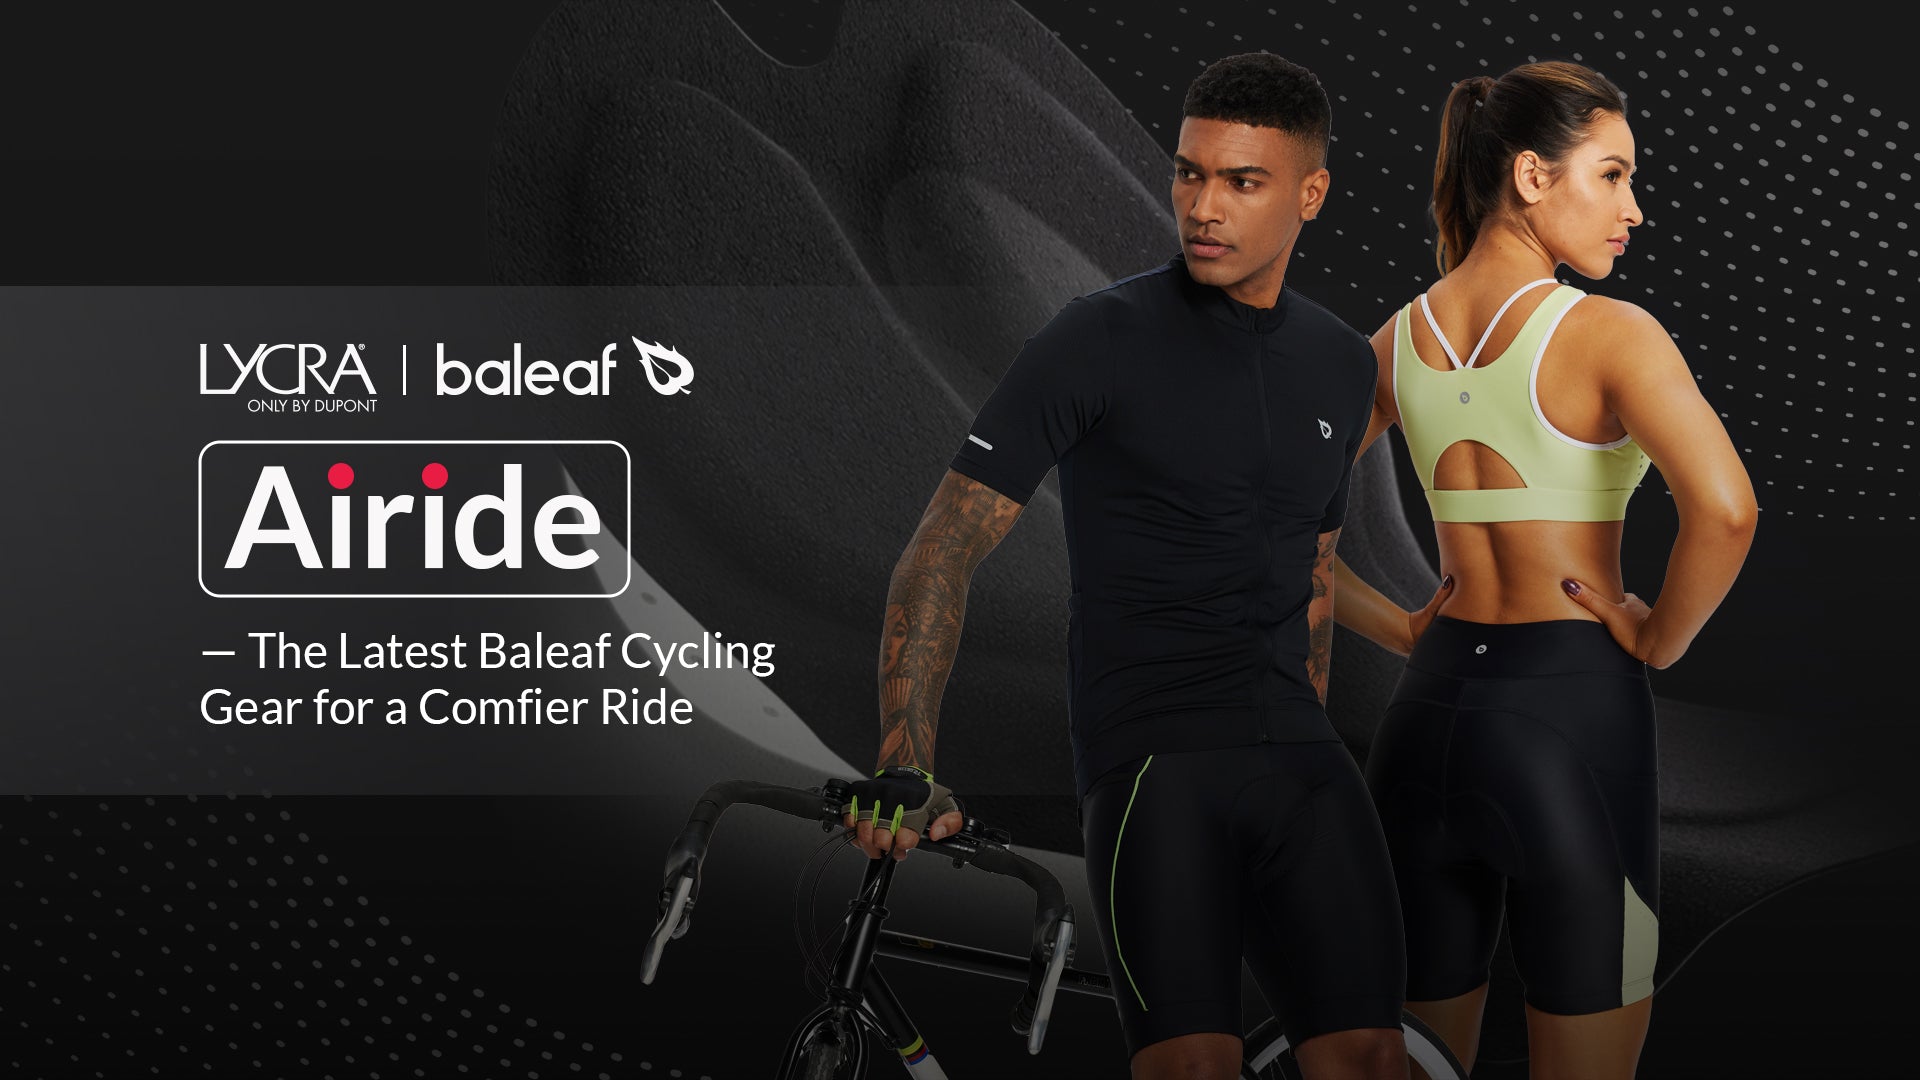  BALEAF Women's Padded Bike Shorts Cycling Pants